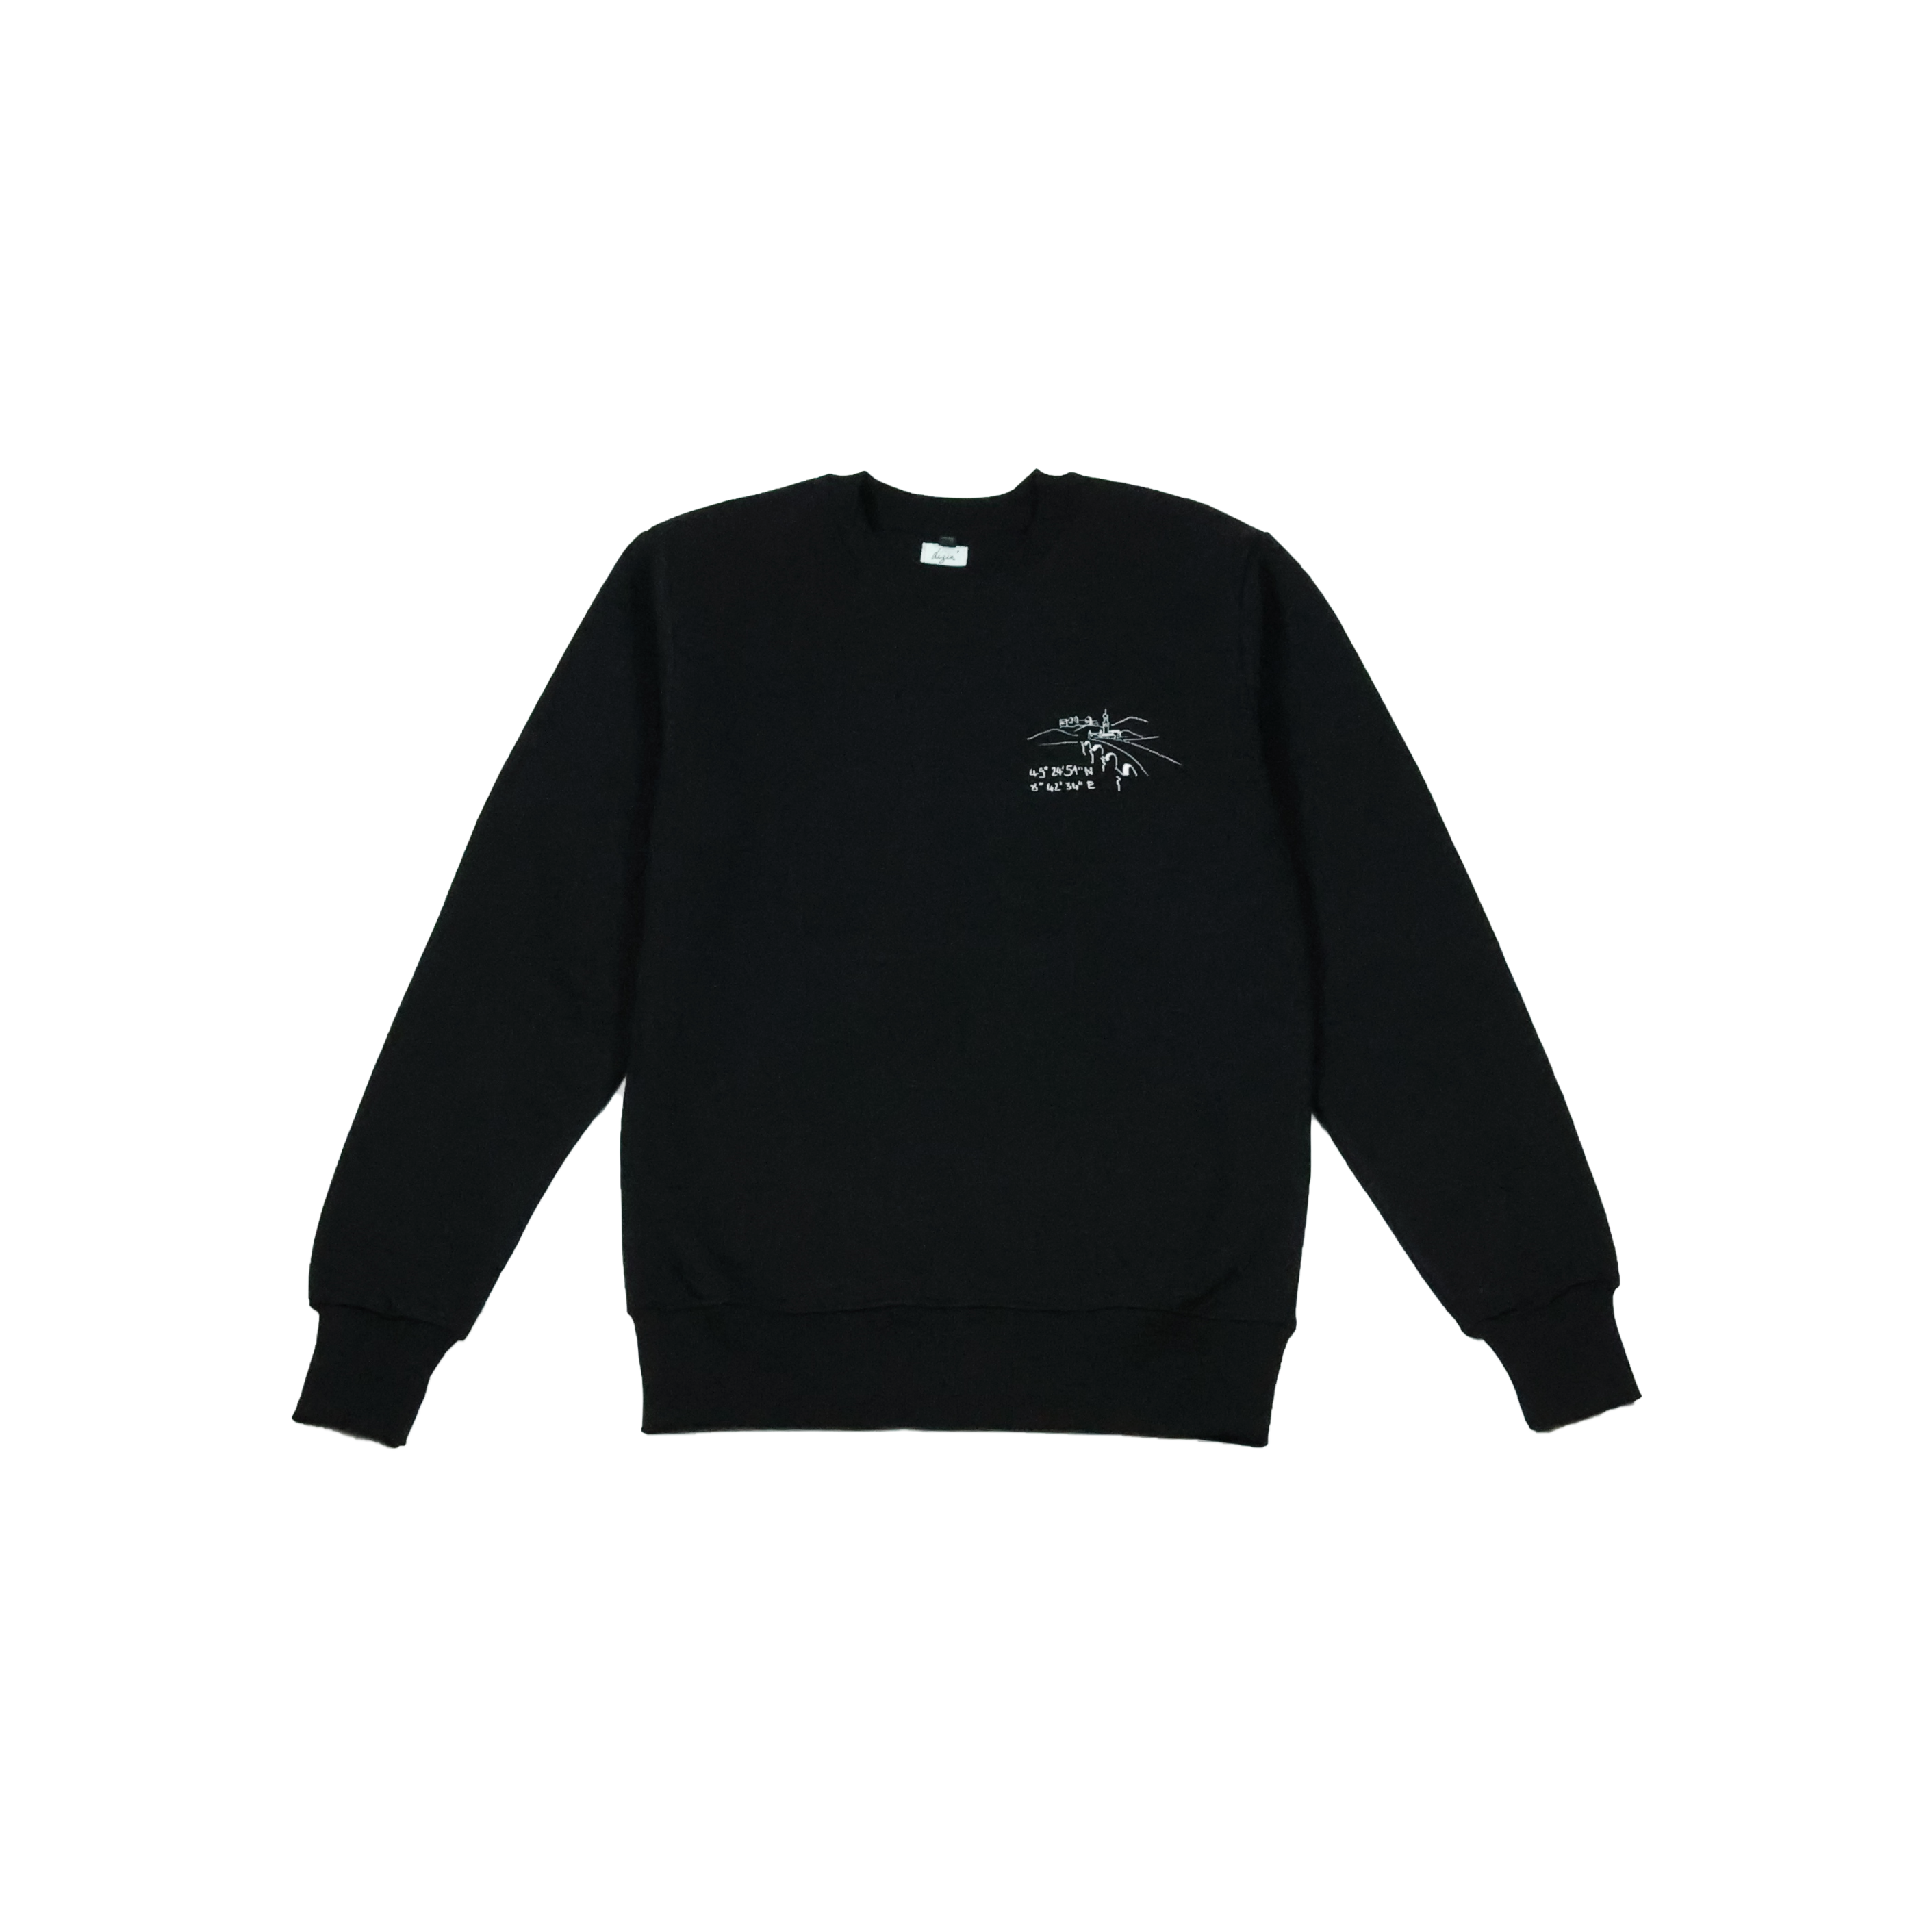 Heidelberg Sweater in schwarz